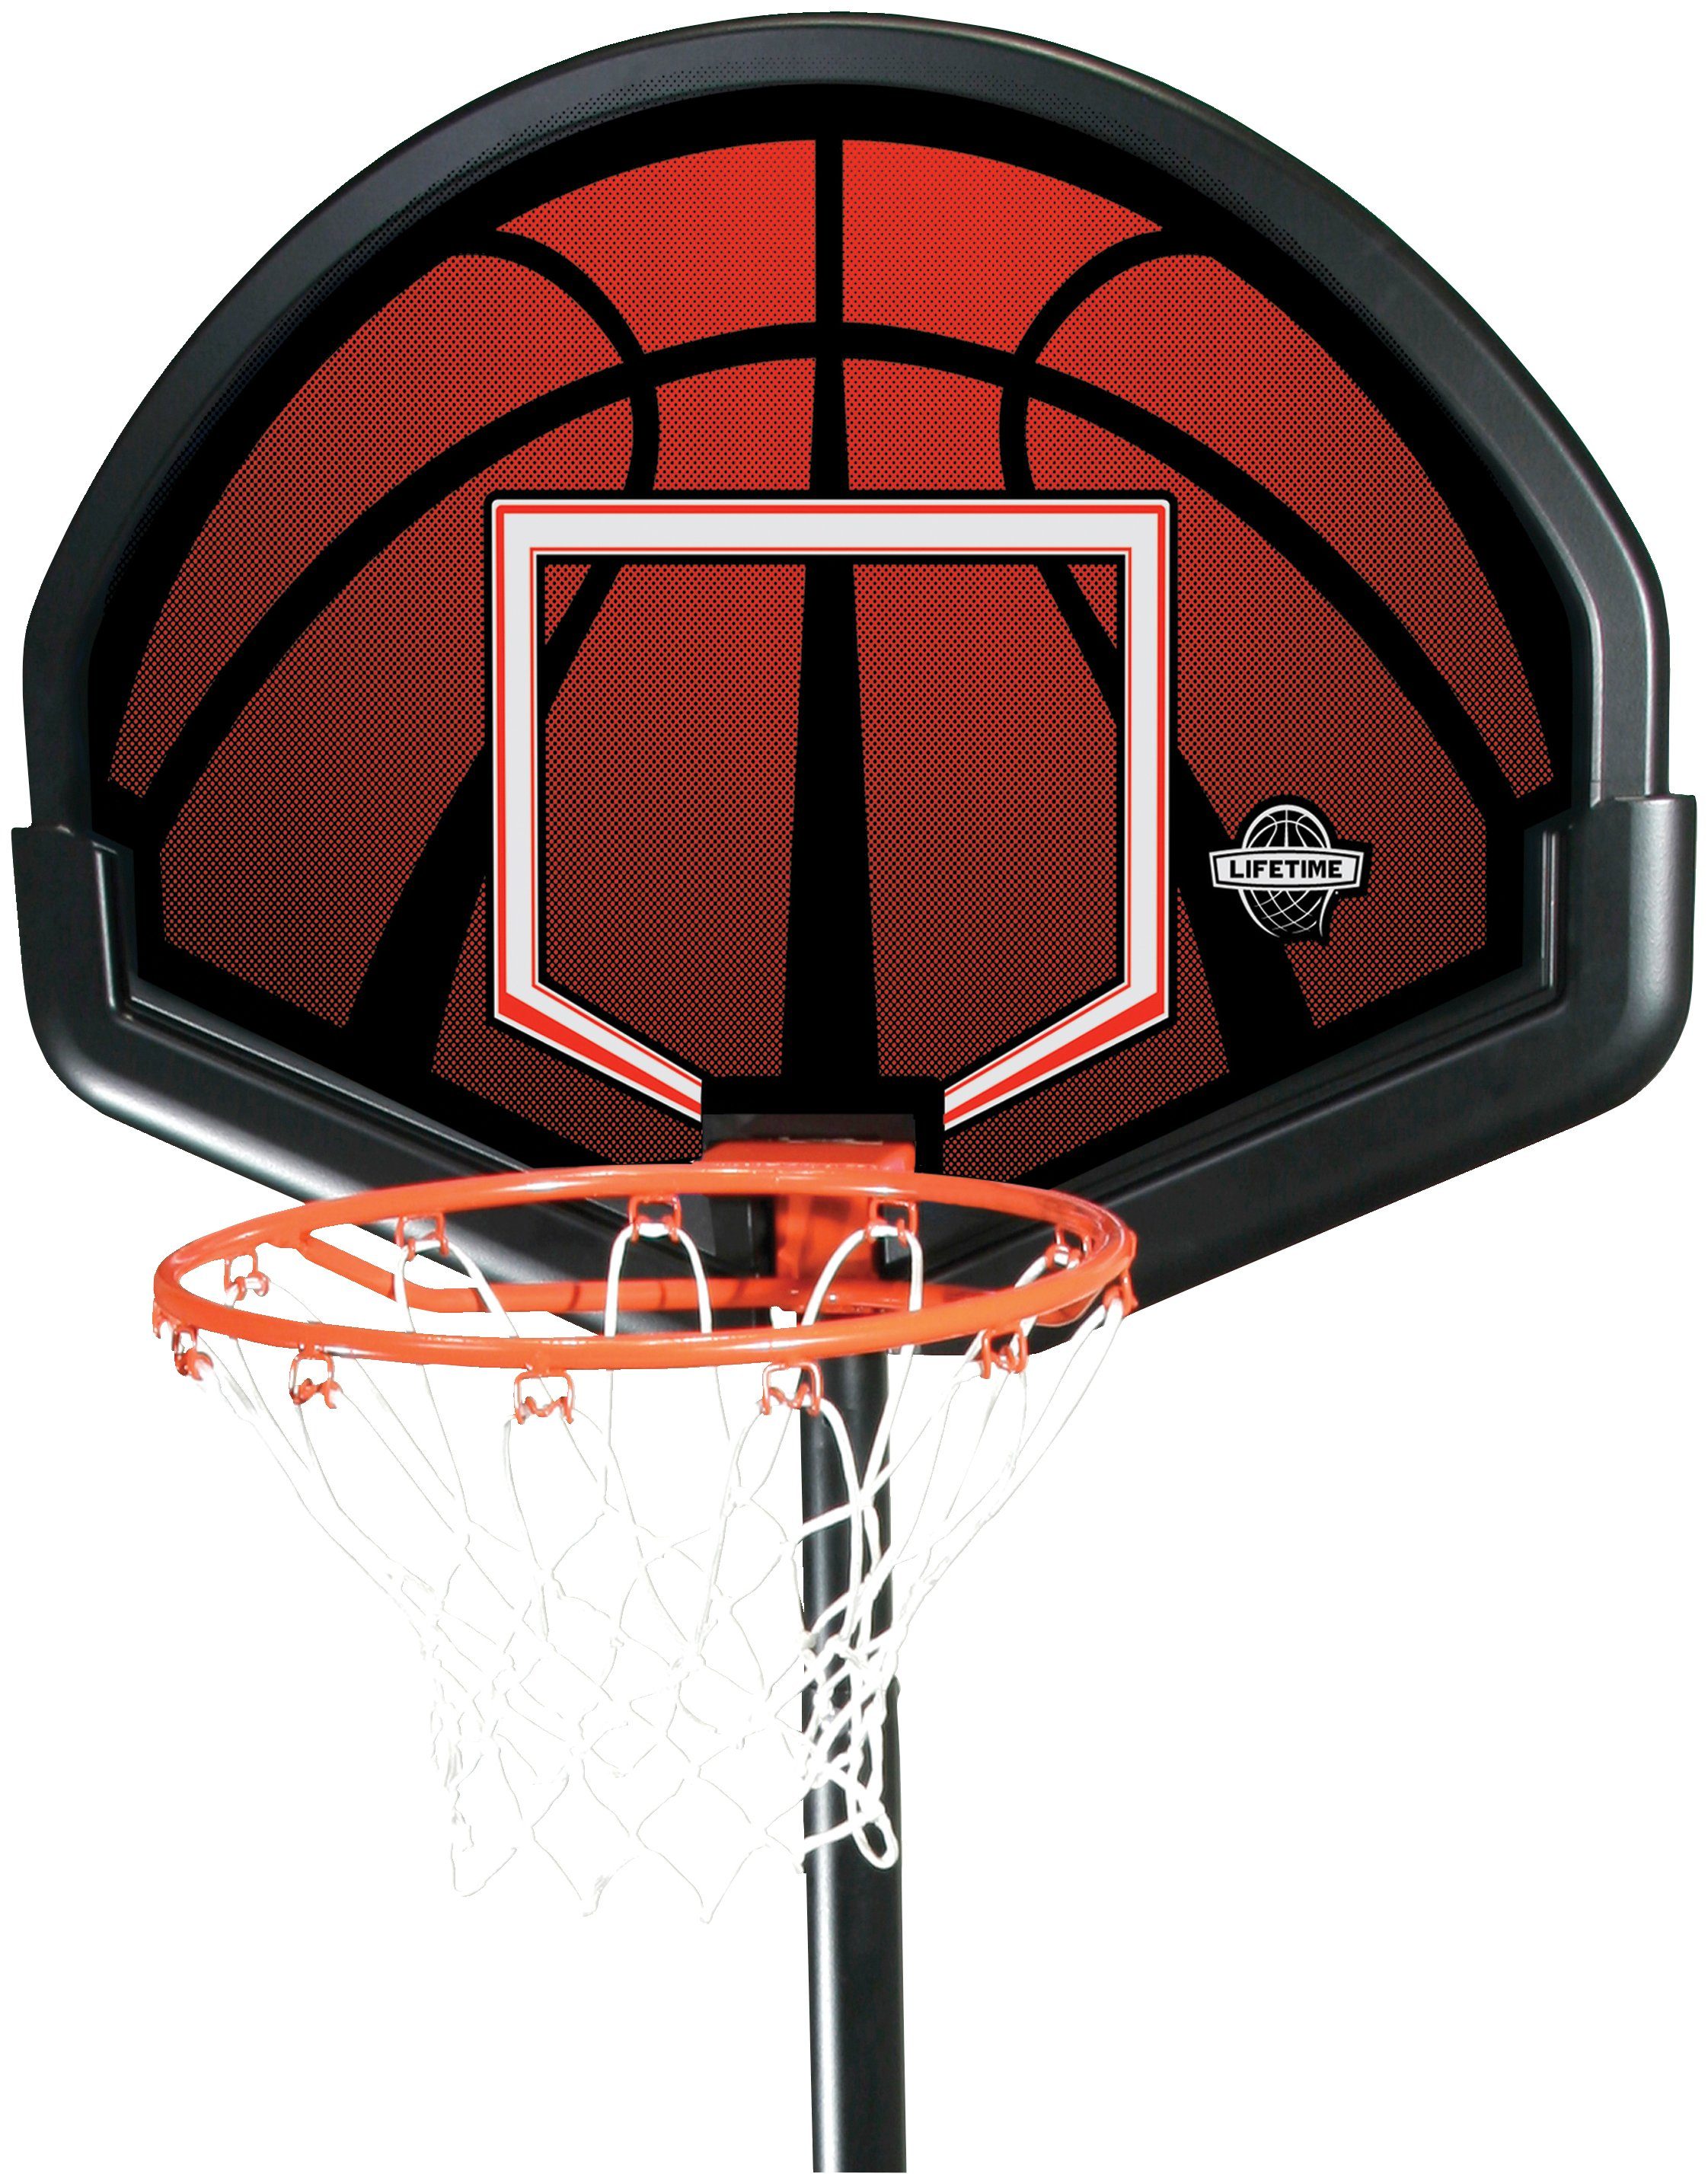 50NRTH Basketballkorb Alabama, höhenverstellbar schwarz/rot